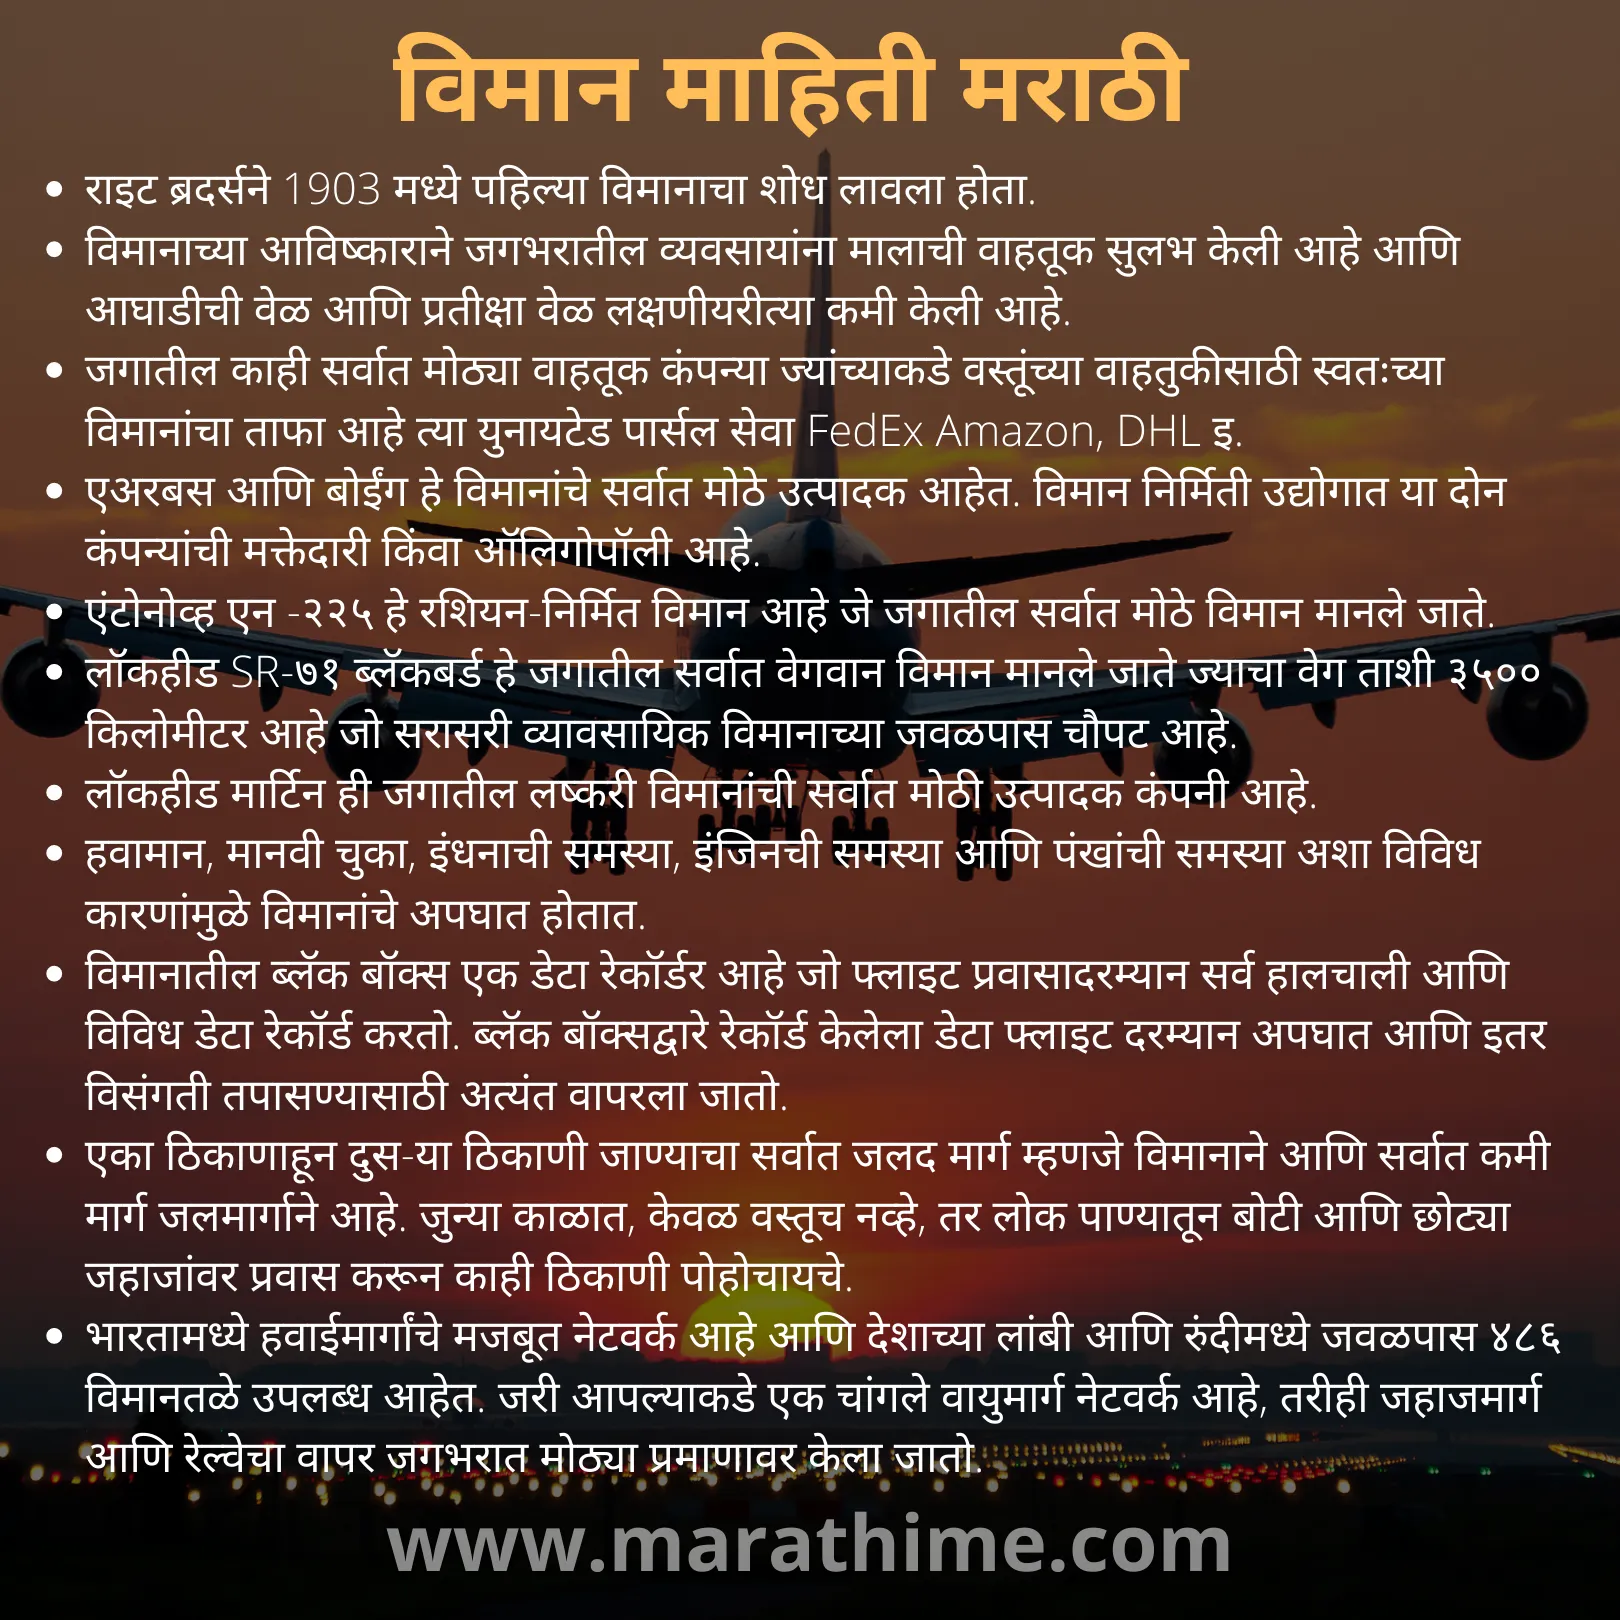 विमान माहिती मराठी-Aeroplane Information in Marathi